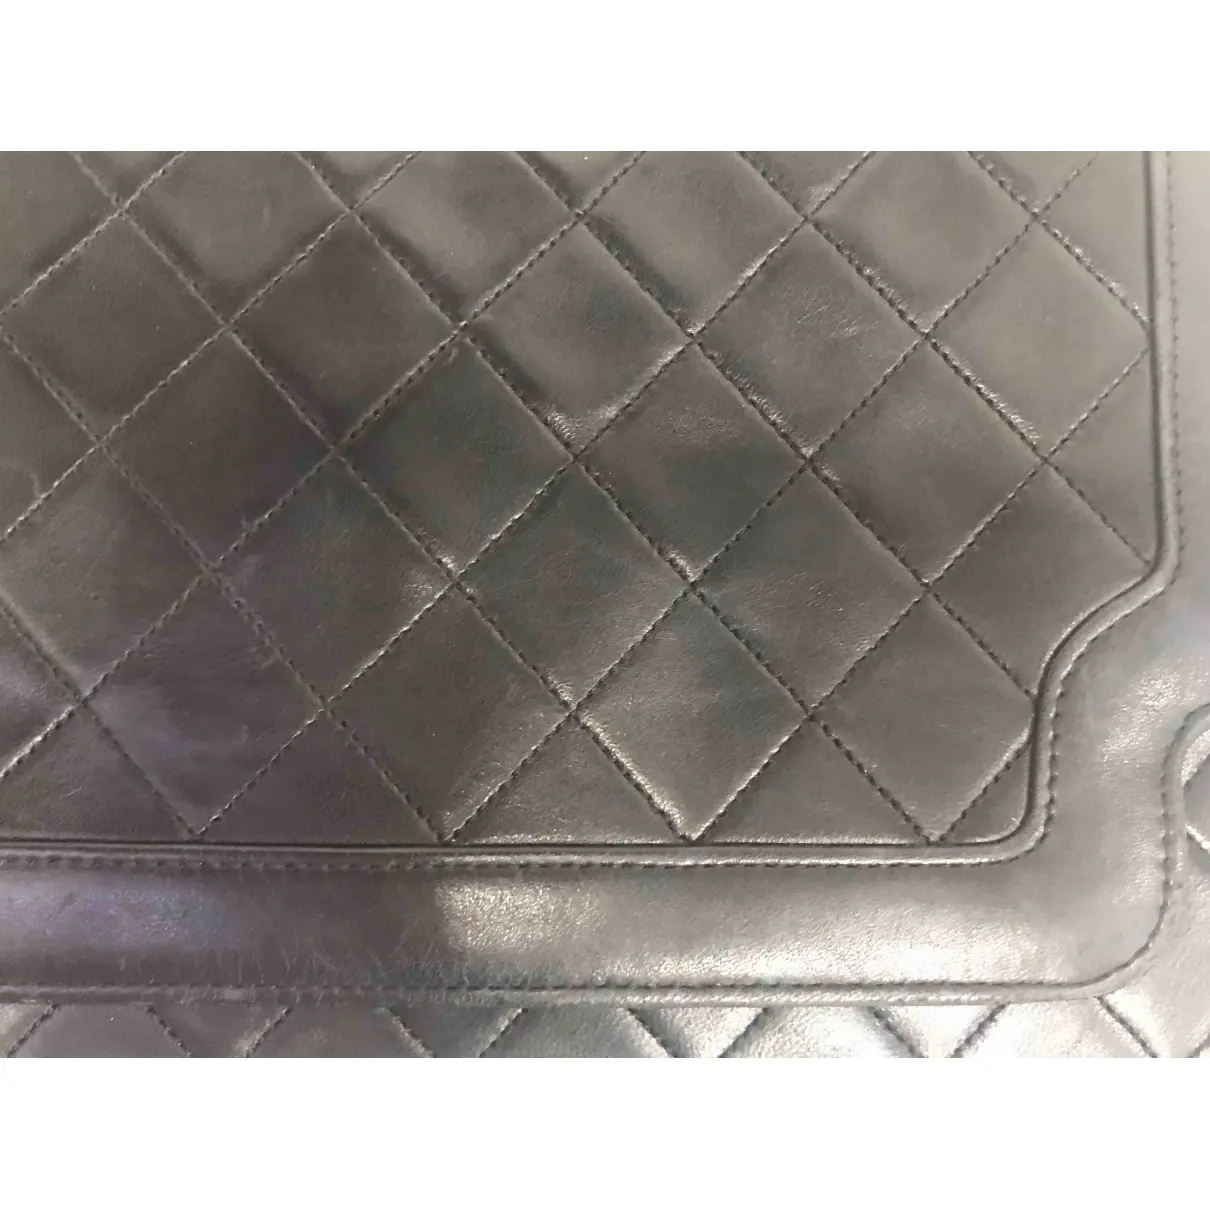 Leather clutch bag Chanel